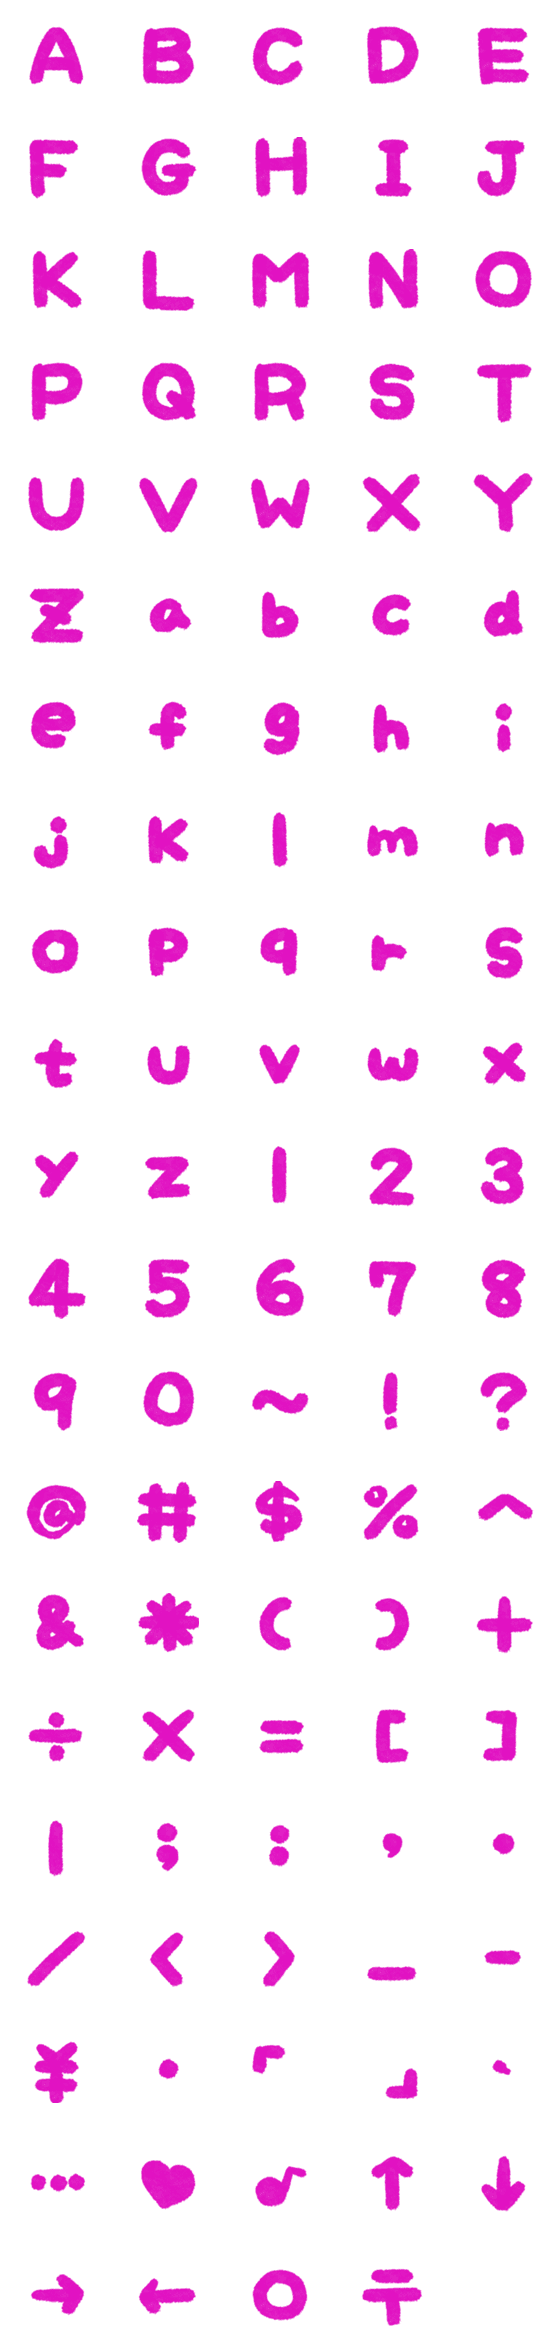 [LINE絵文字]PARIS HILTON PINK Letter number symbols2の画像一覧